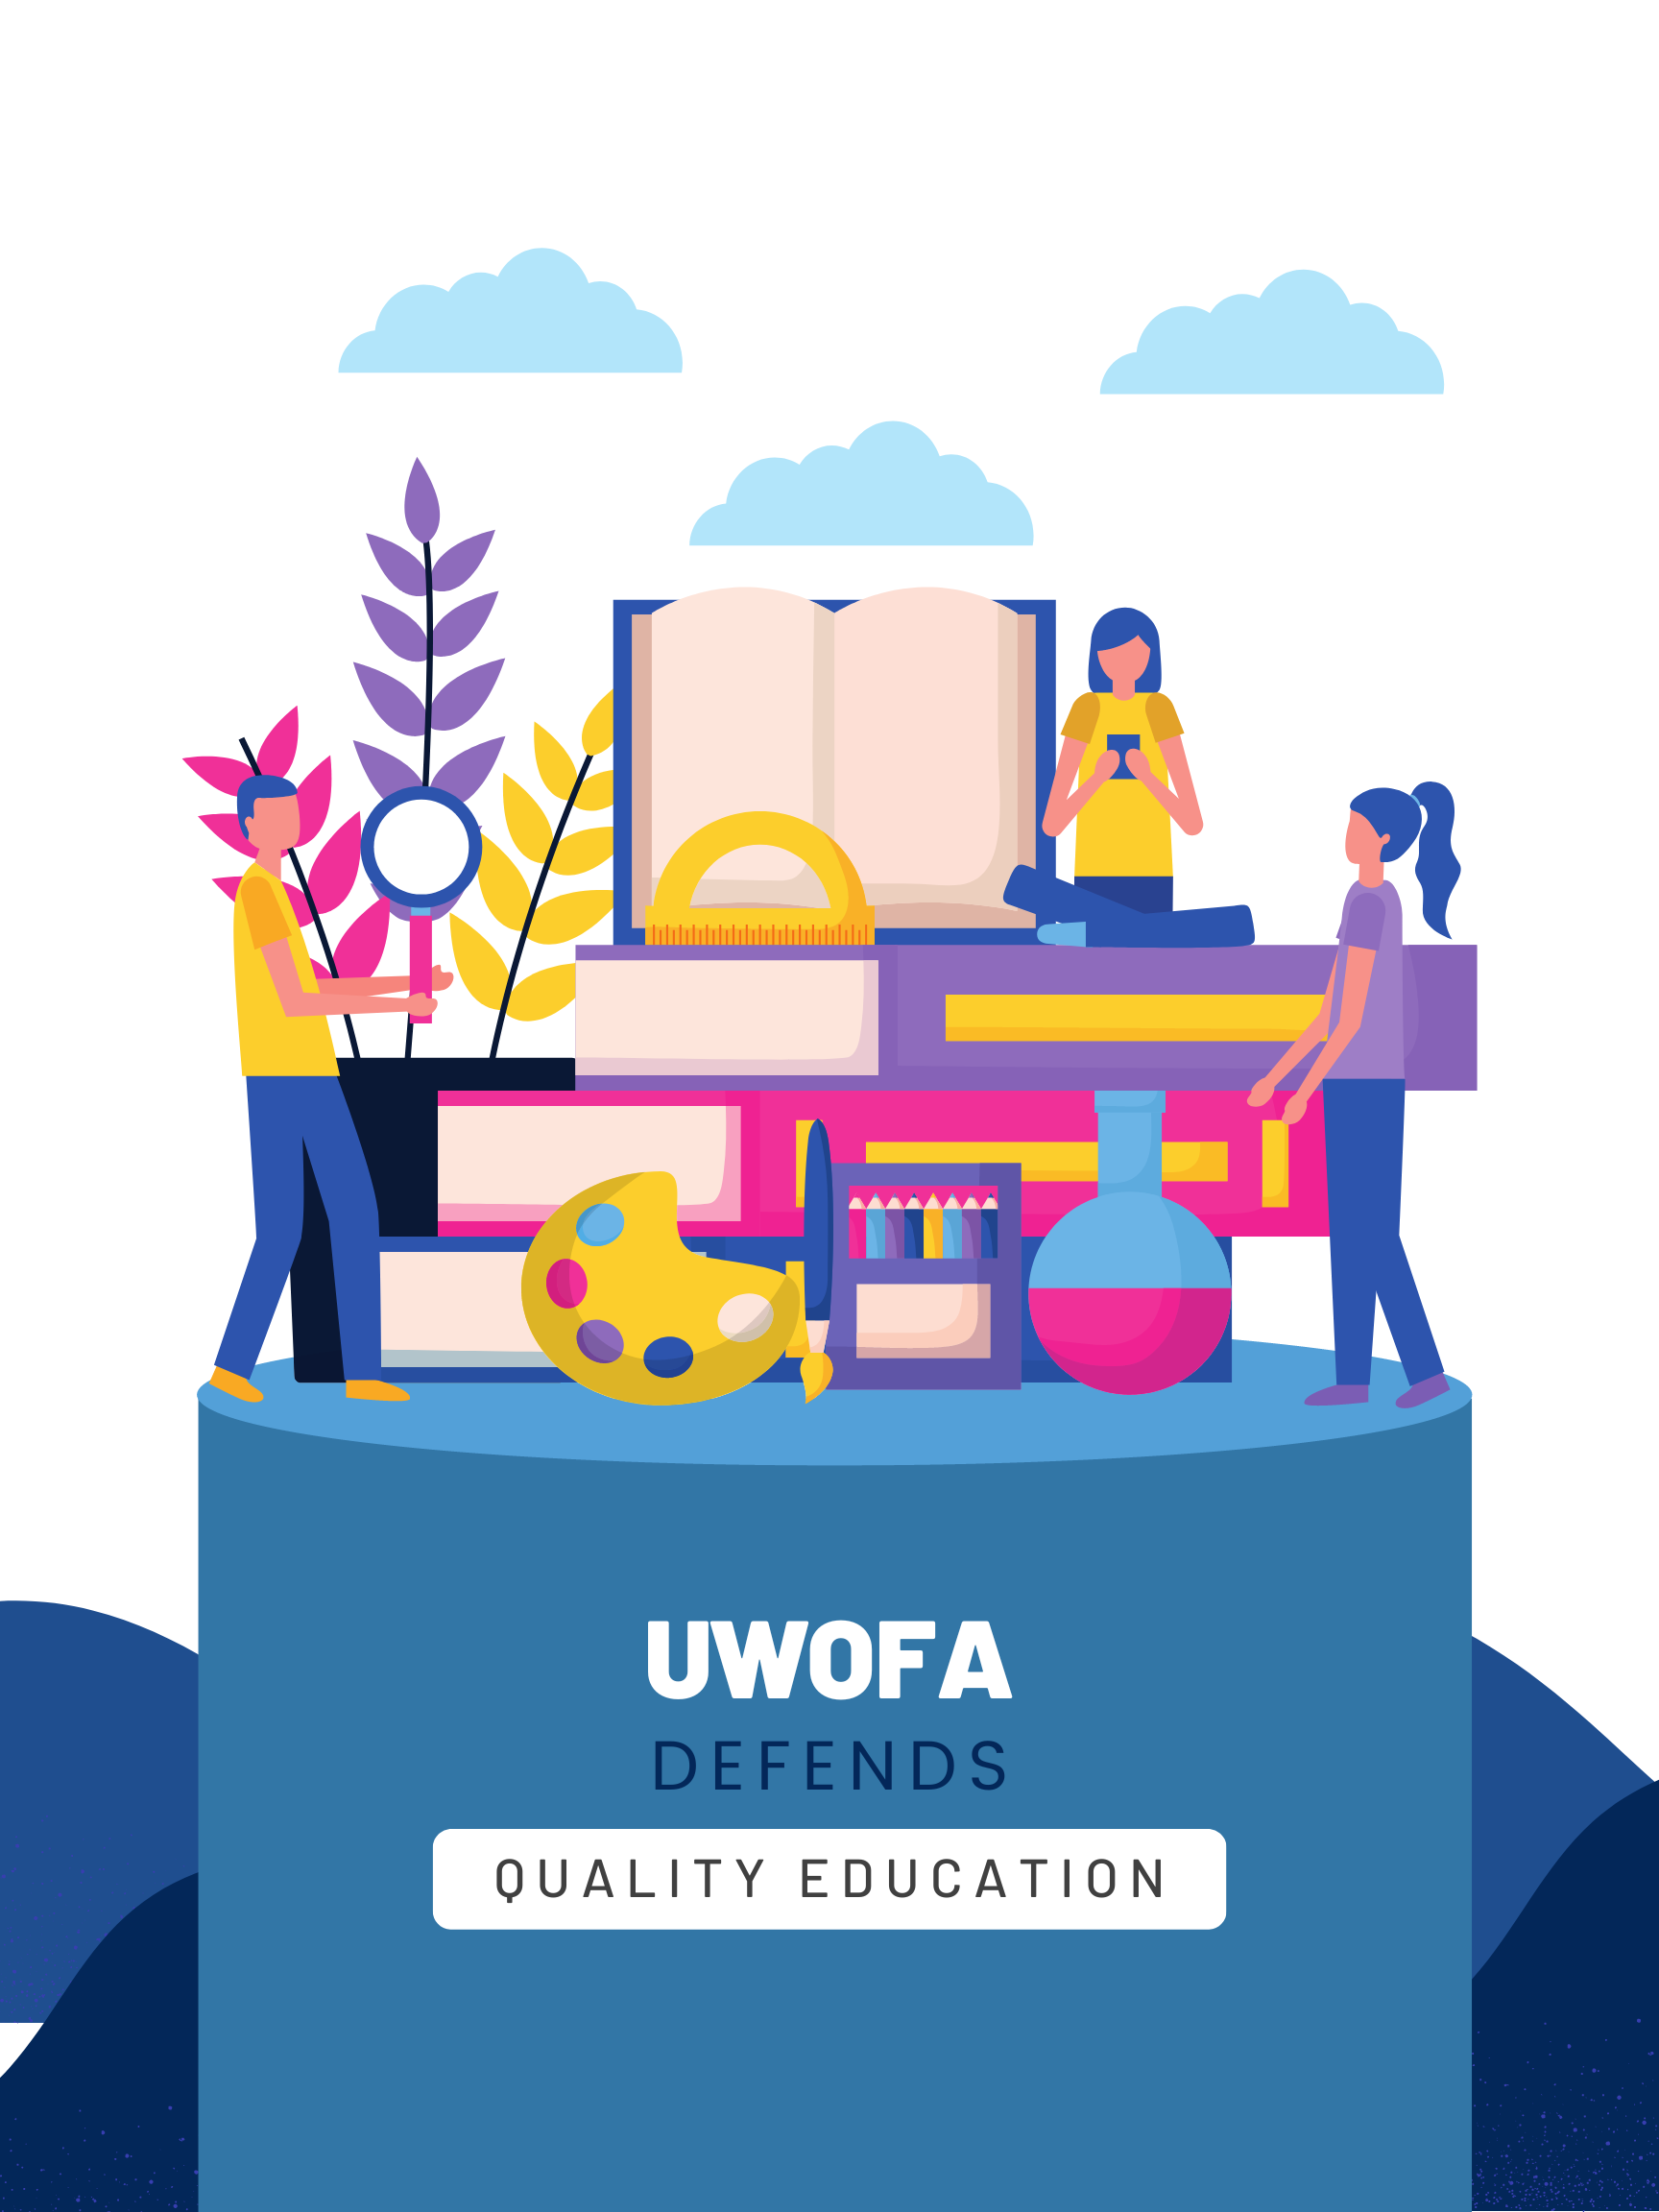 TEXT: UWOFA defends quality education, IMAGE: books, people